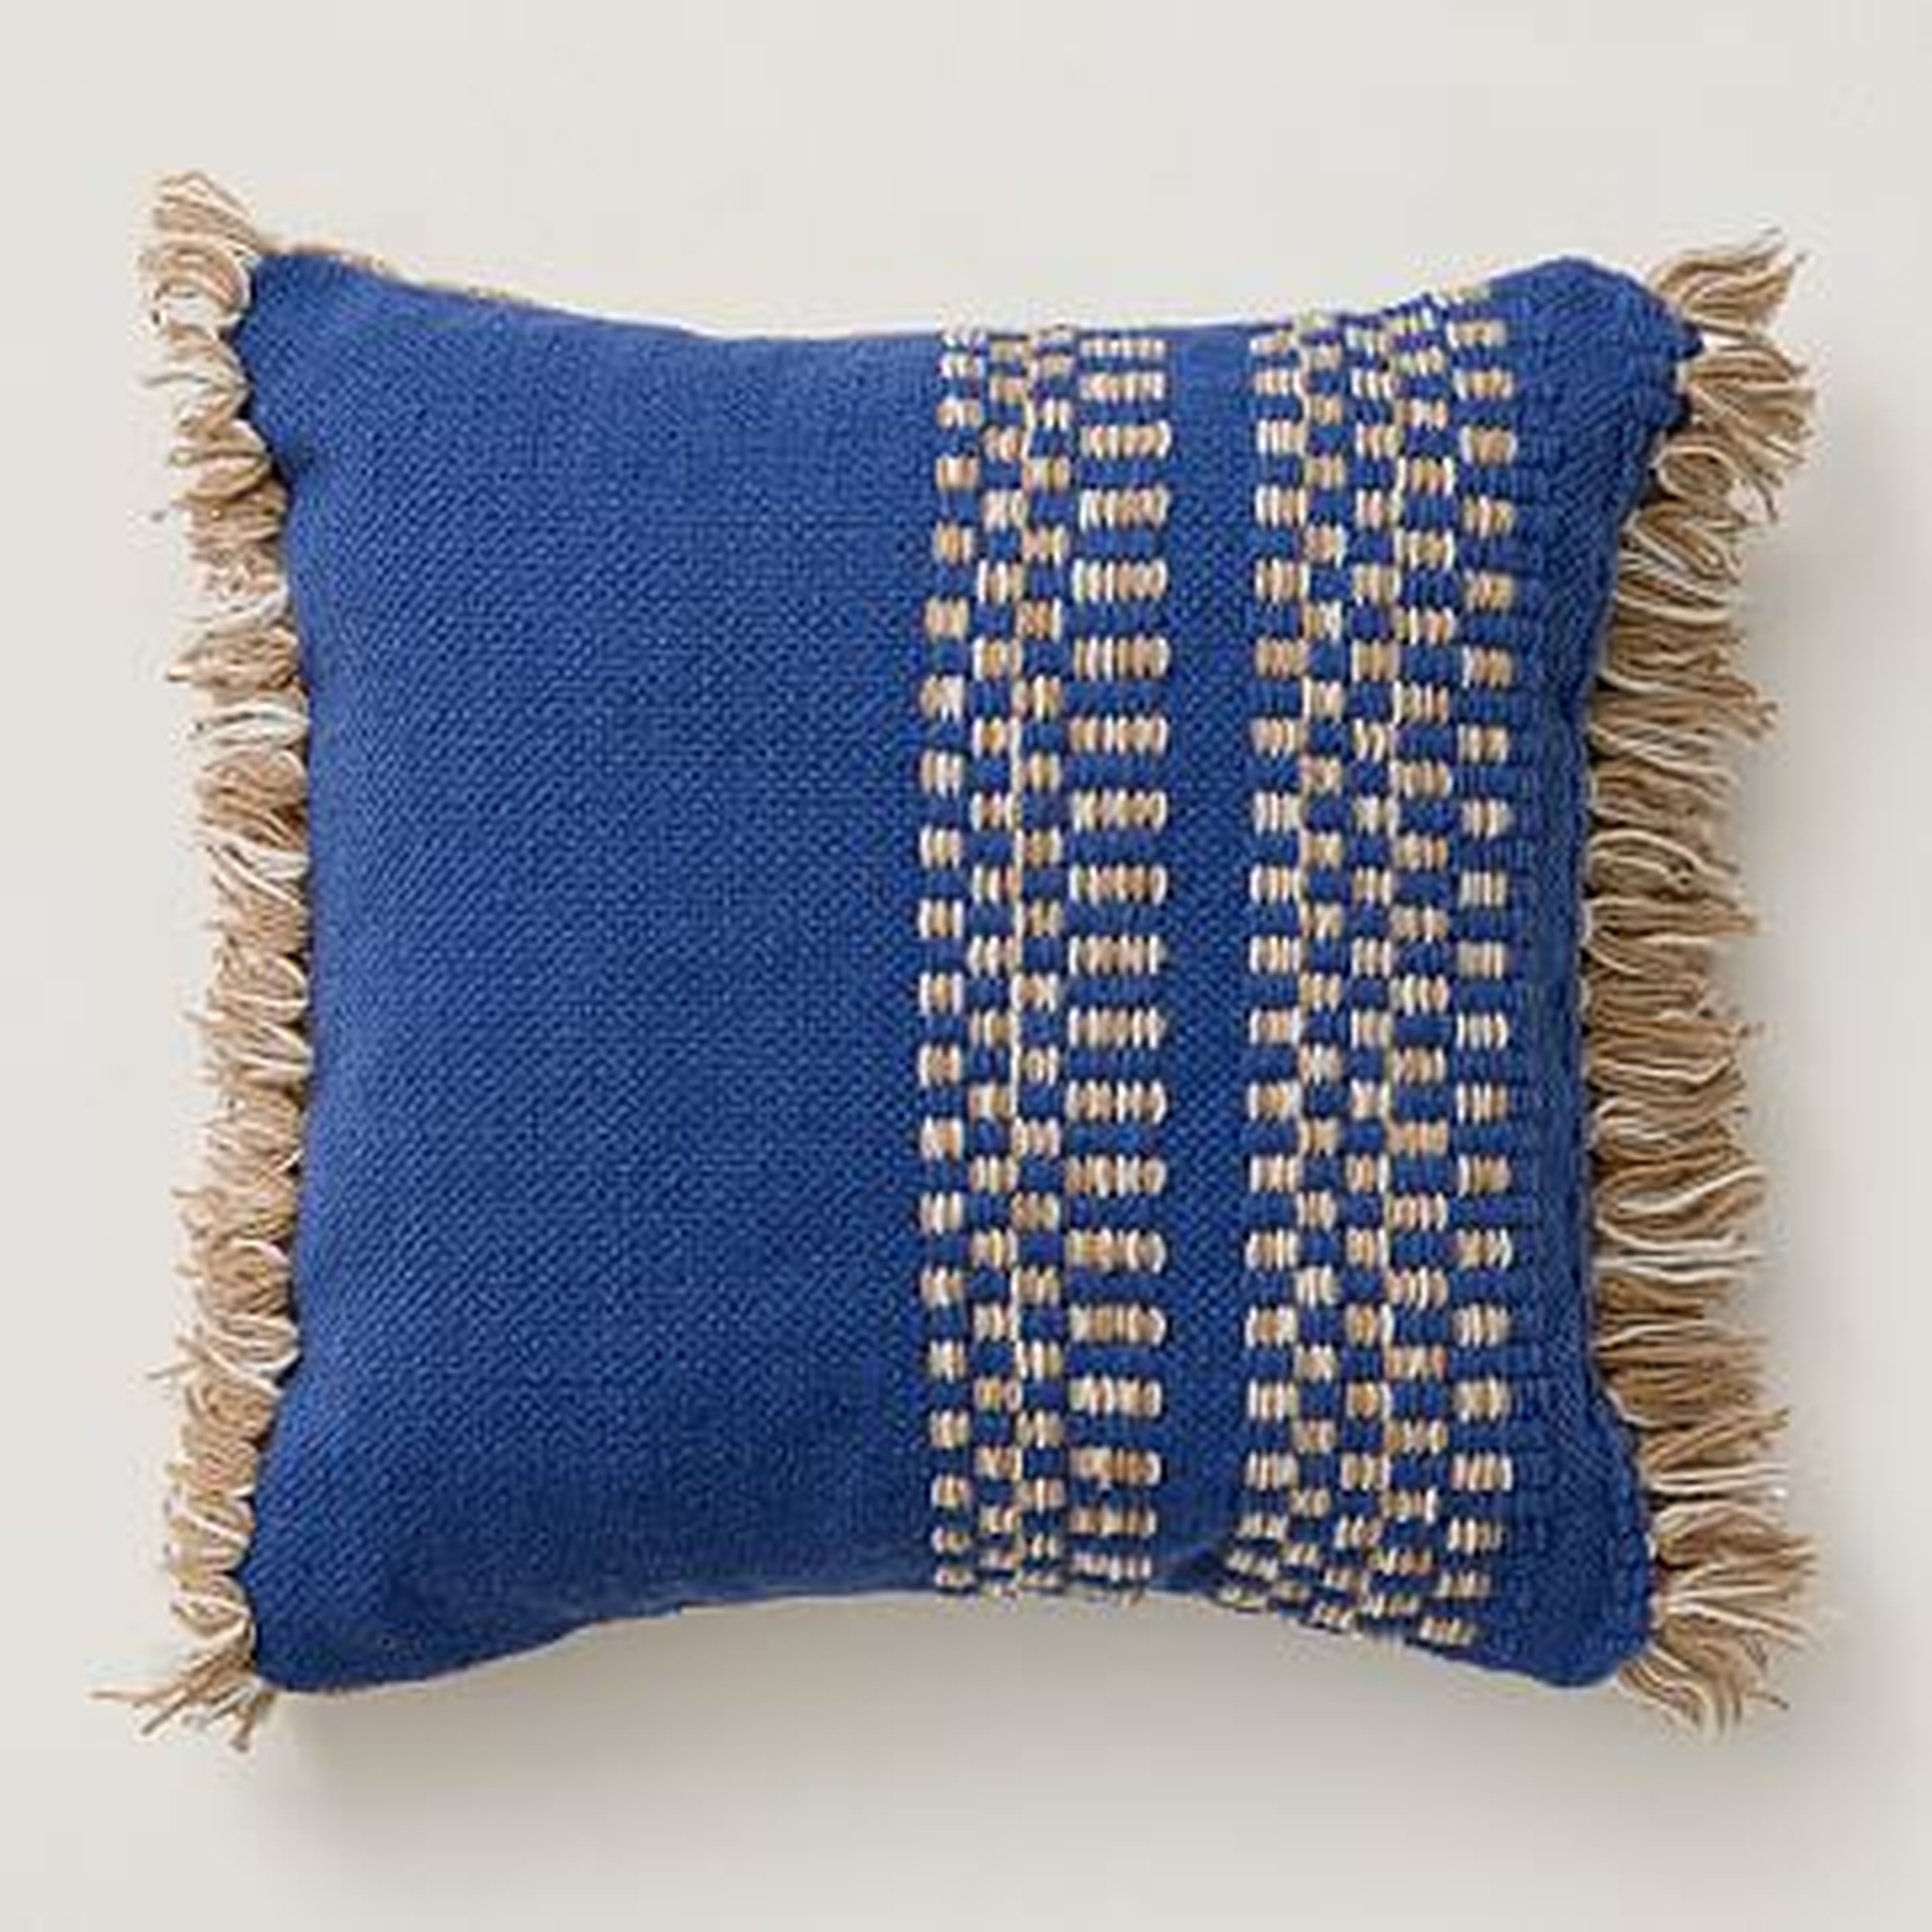 Woven Mixed Side Stripe Indoor/Outdoor Pillow, Colbalt, 20"x20" - West Elm